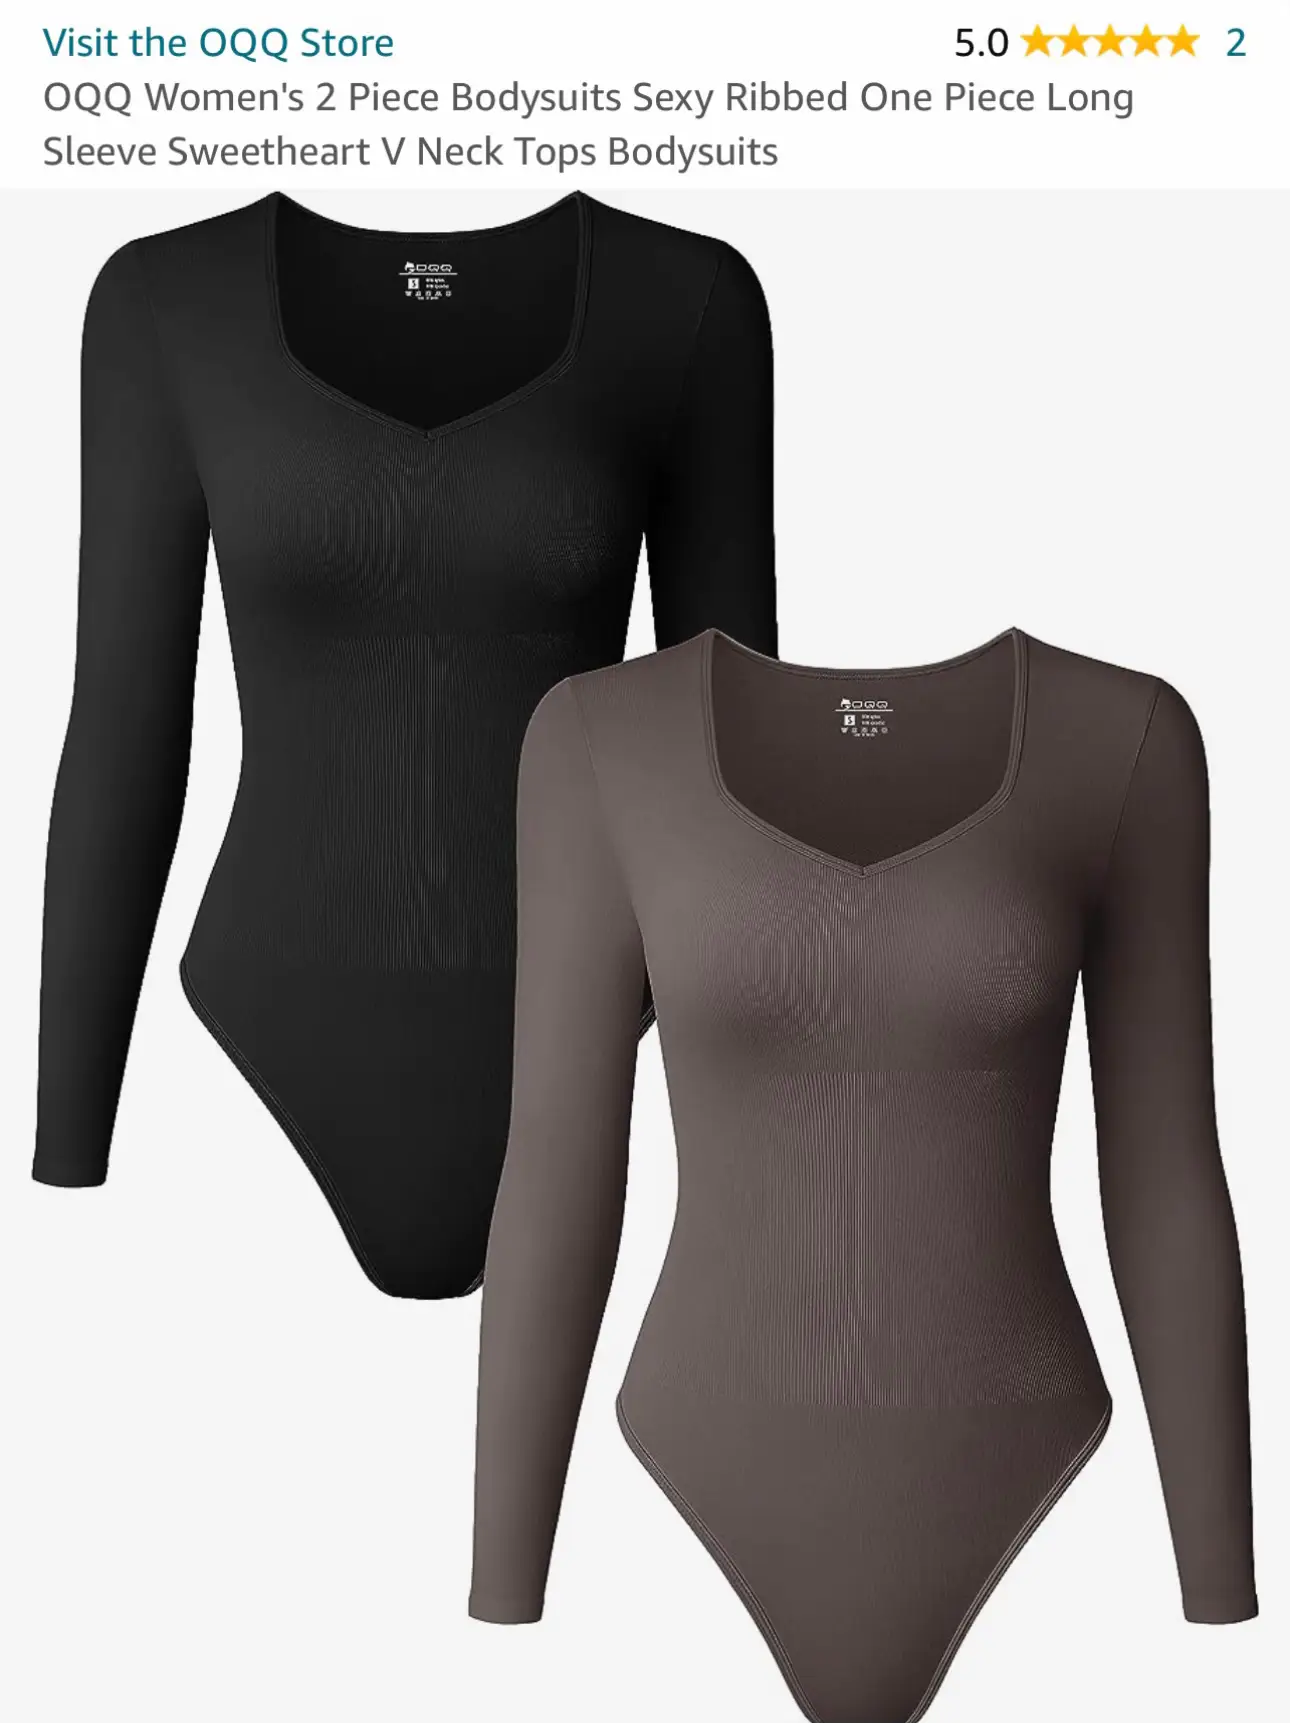 OQQ Women's 3 Piece Bodysuits Sexy Ribbed Sleeveless Adjustable Spaghetti  Striped Tops Shapewear Bodysuits, Black Grey Beige : : Fashion